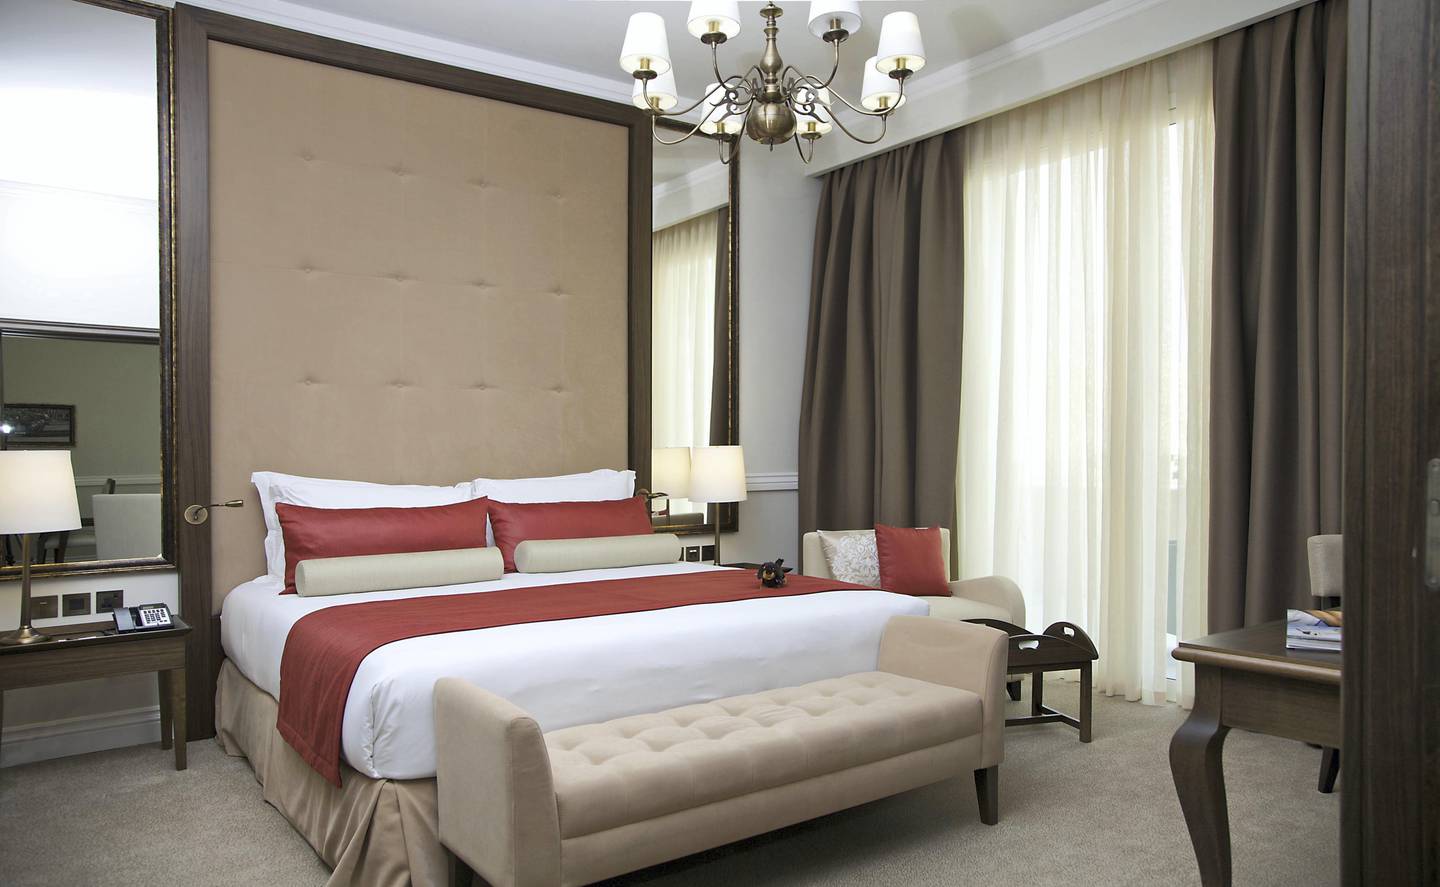 The rooms at Dukes Dubai are spacious and quintessentially British. Courtesy Dukes Dubai